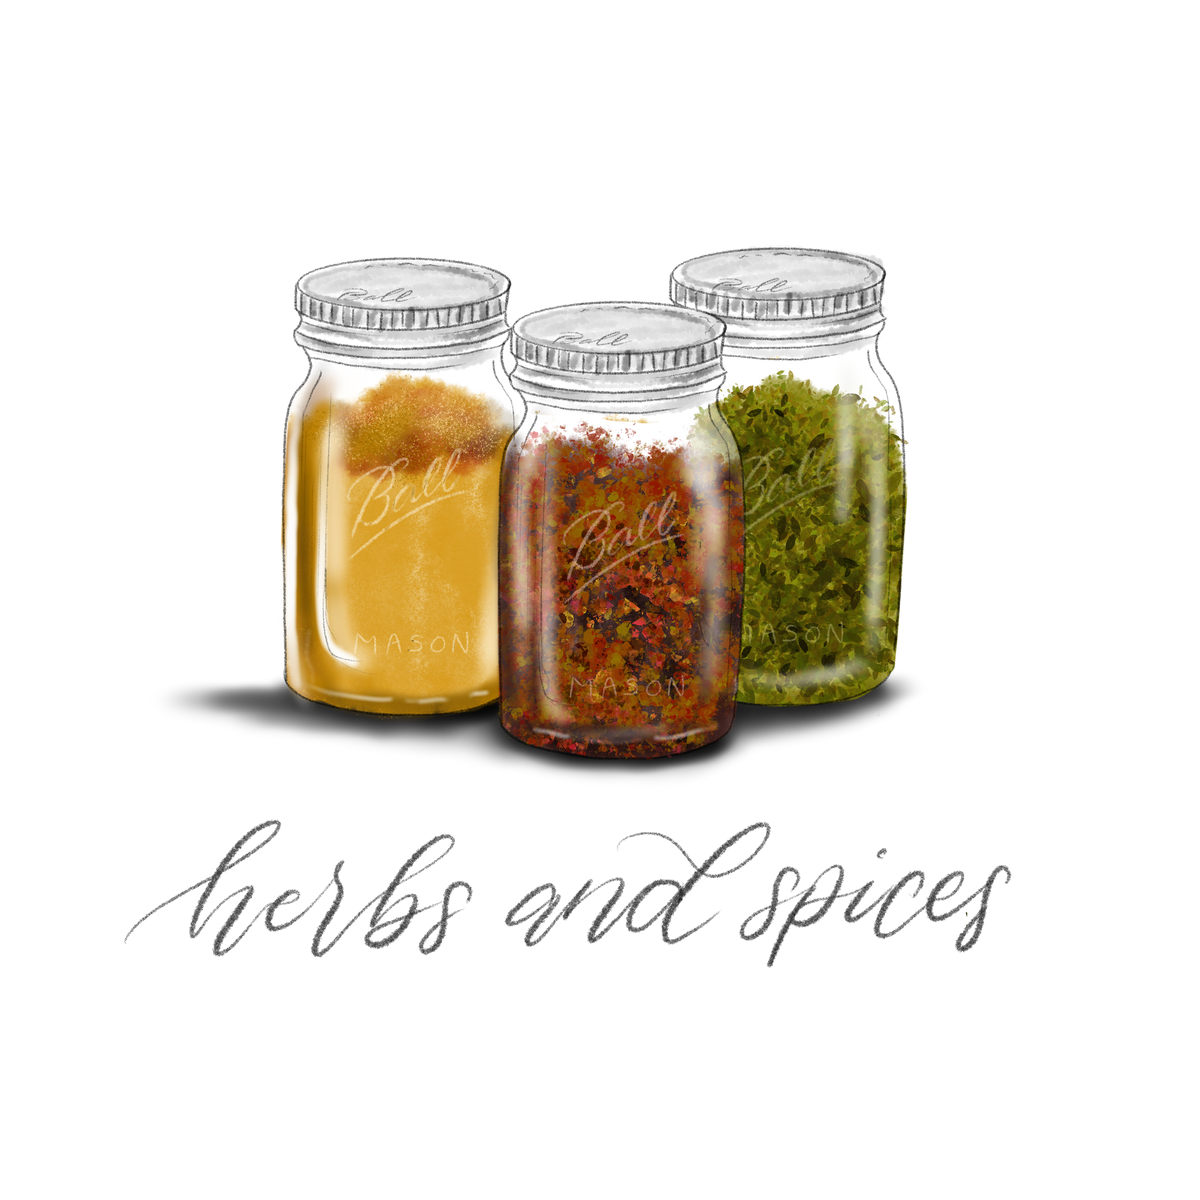 Trader Joe's Onion Salt Seasoning Blend (Spice), 2.0oz (57g)